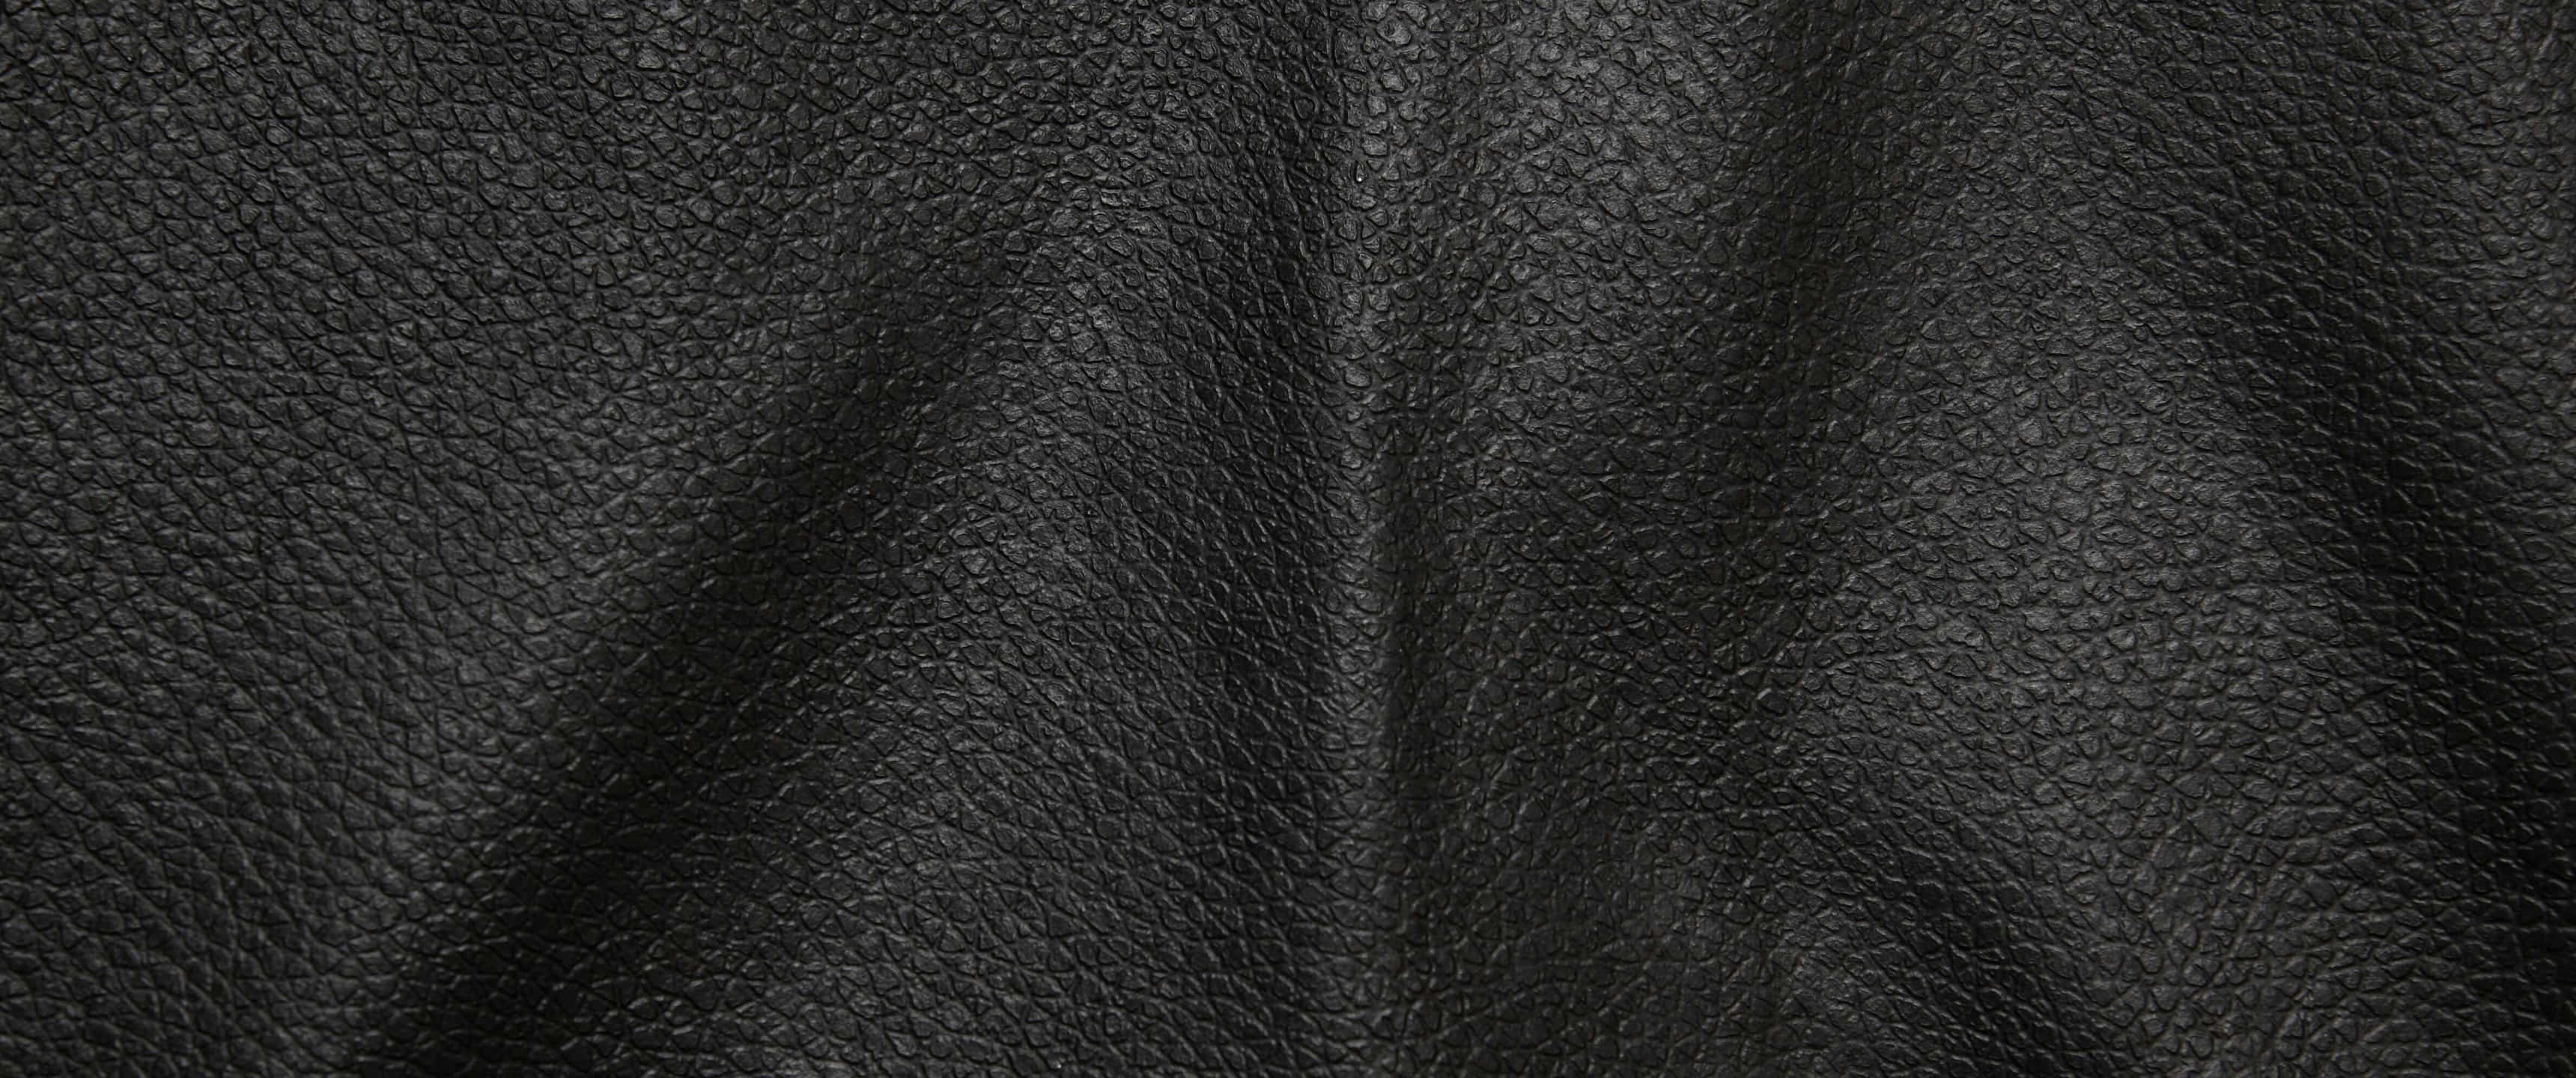 Download Leather Texture Black Bulges Wallpaper | Wallpapers.com